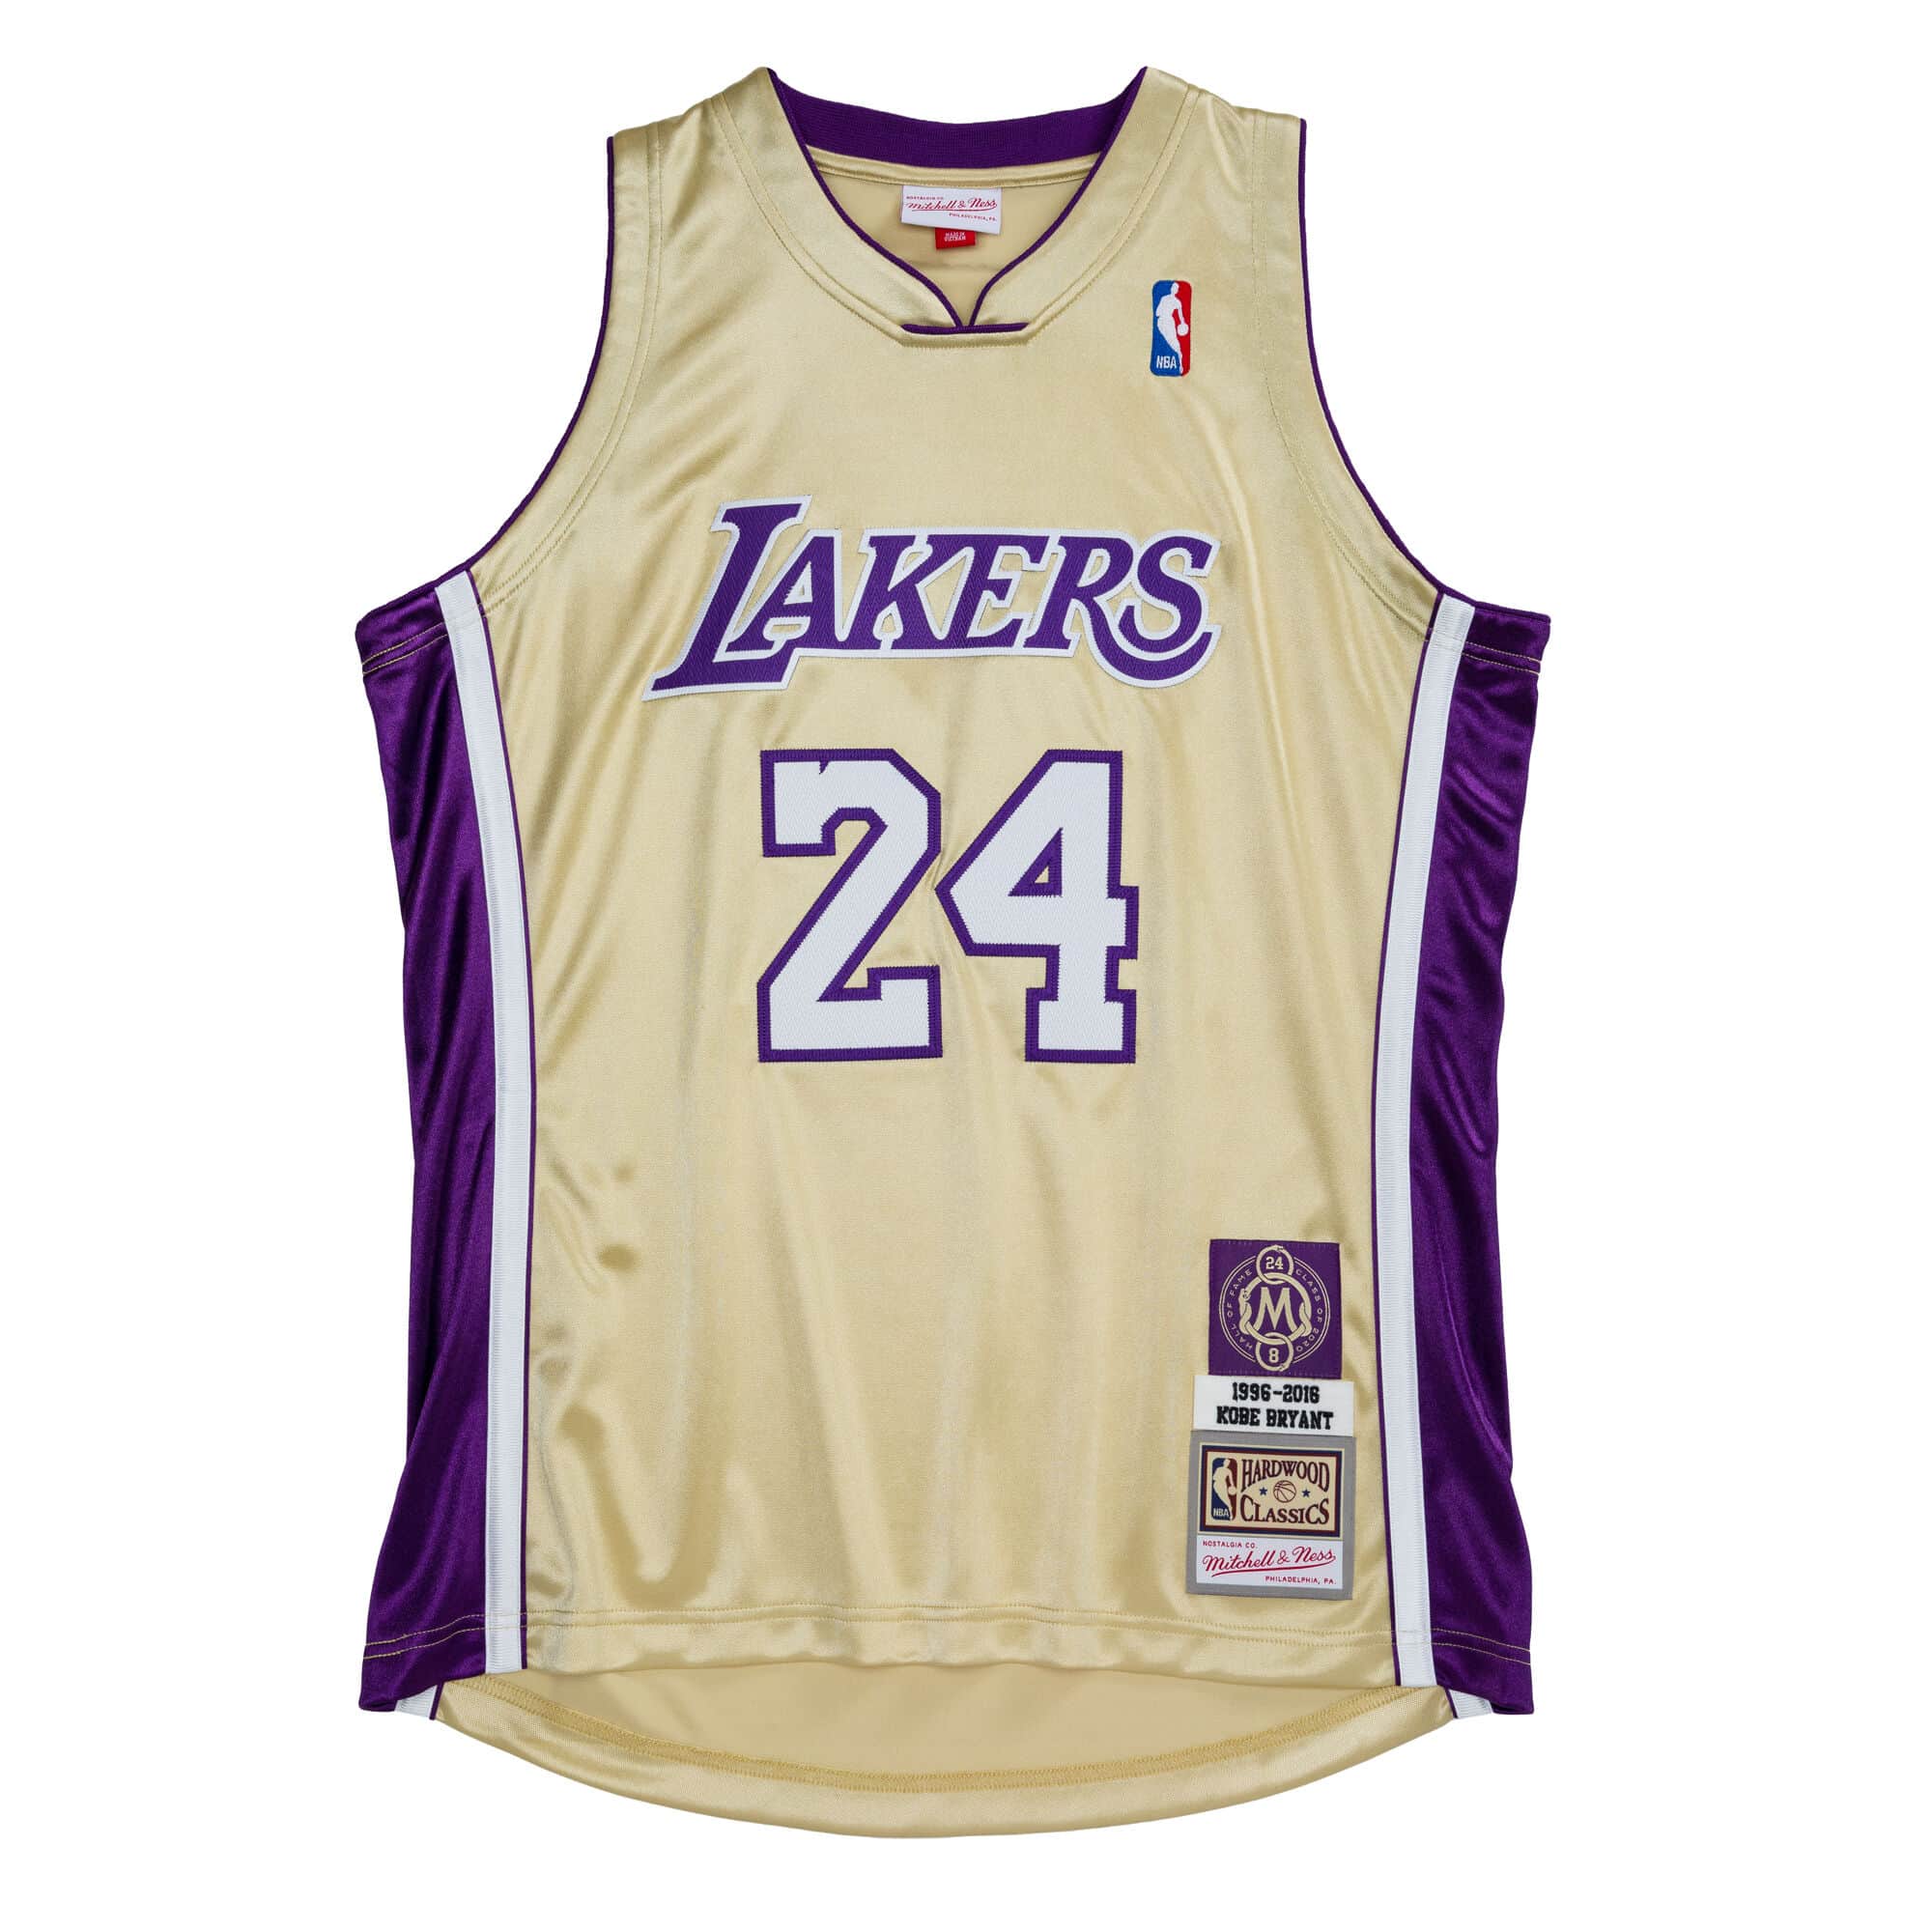 Kobe Bryant Los Angeles Lakers Black Mamba Jersey - Rare Basketball Jerseys